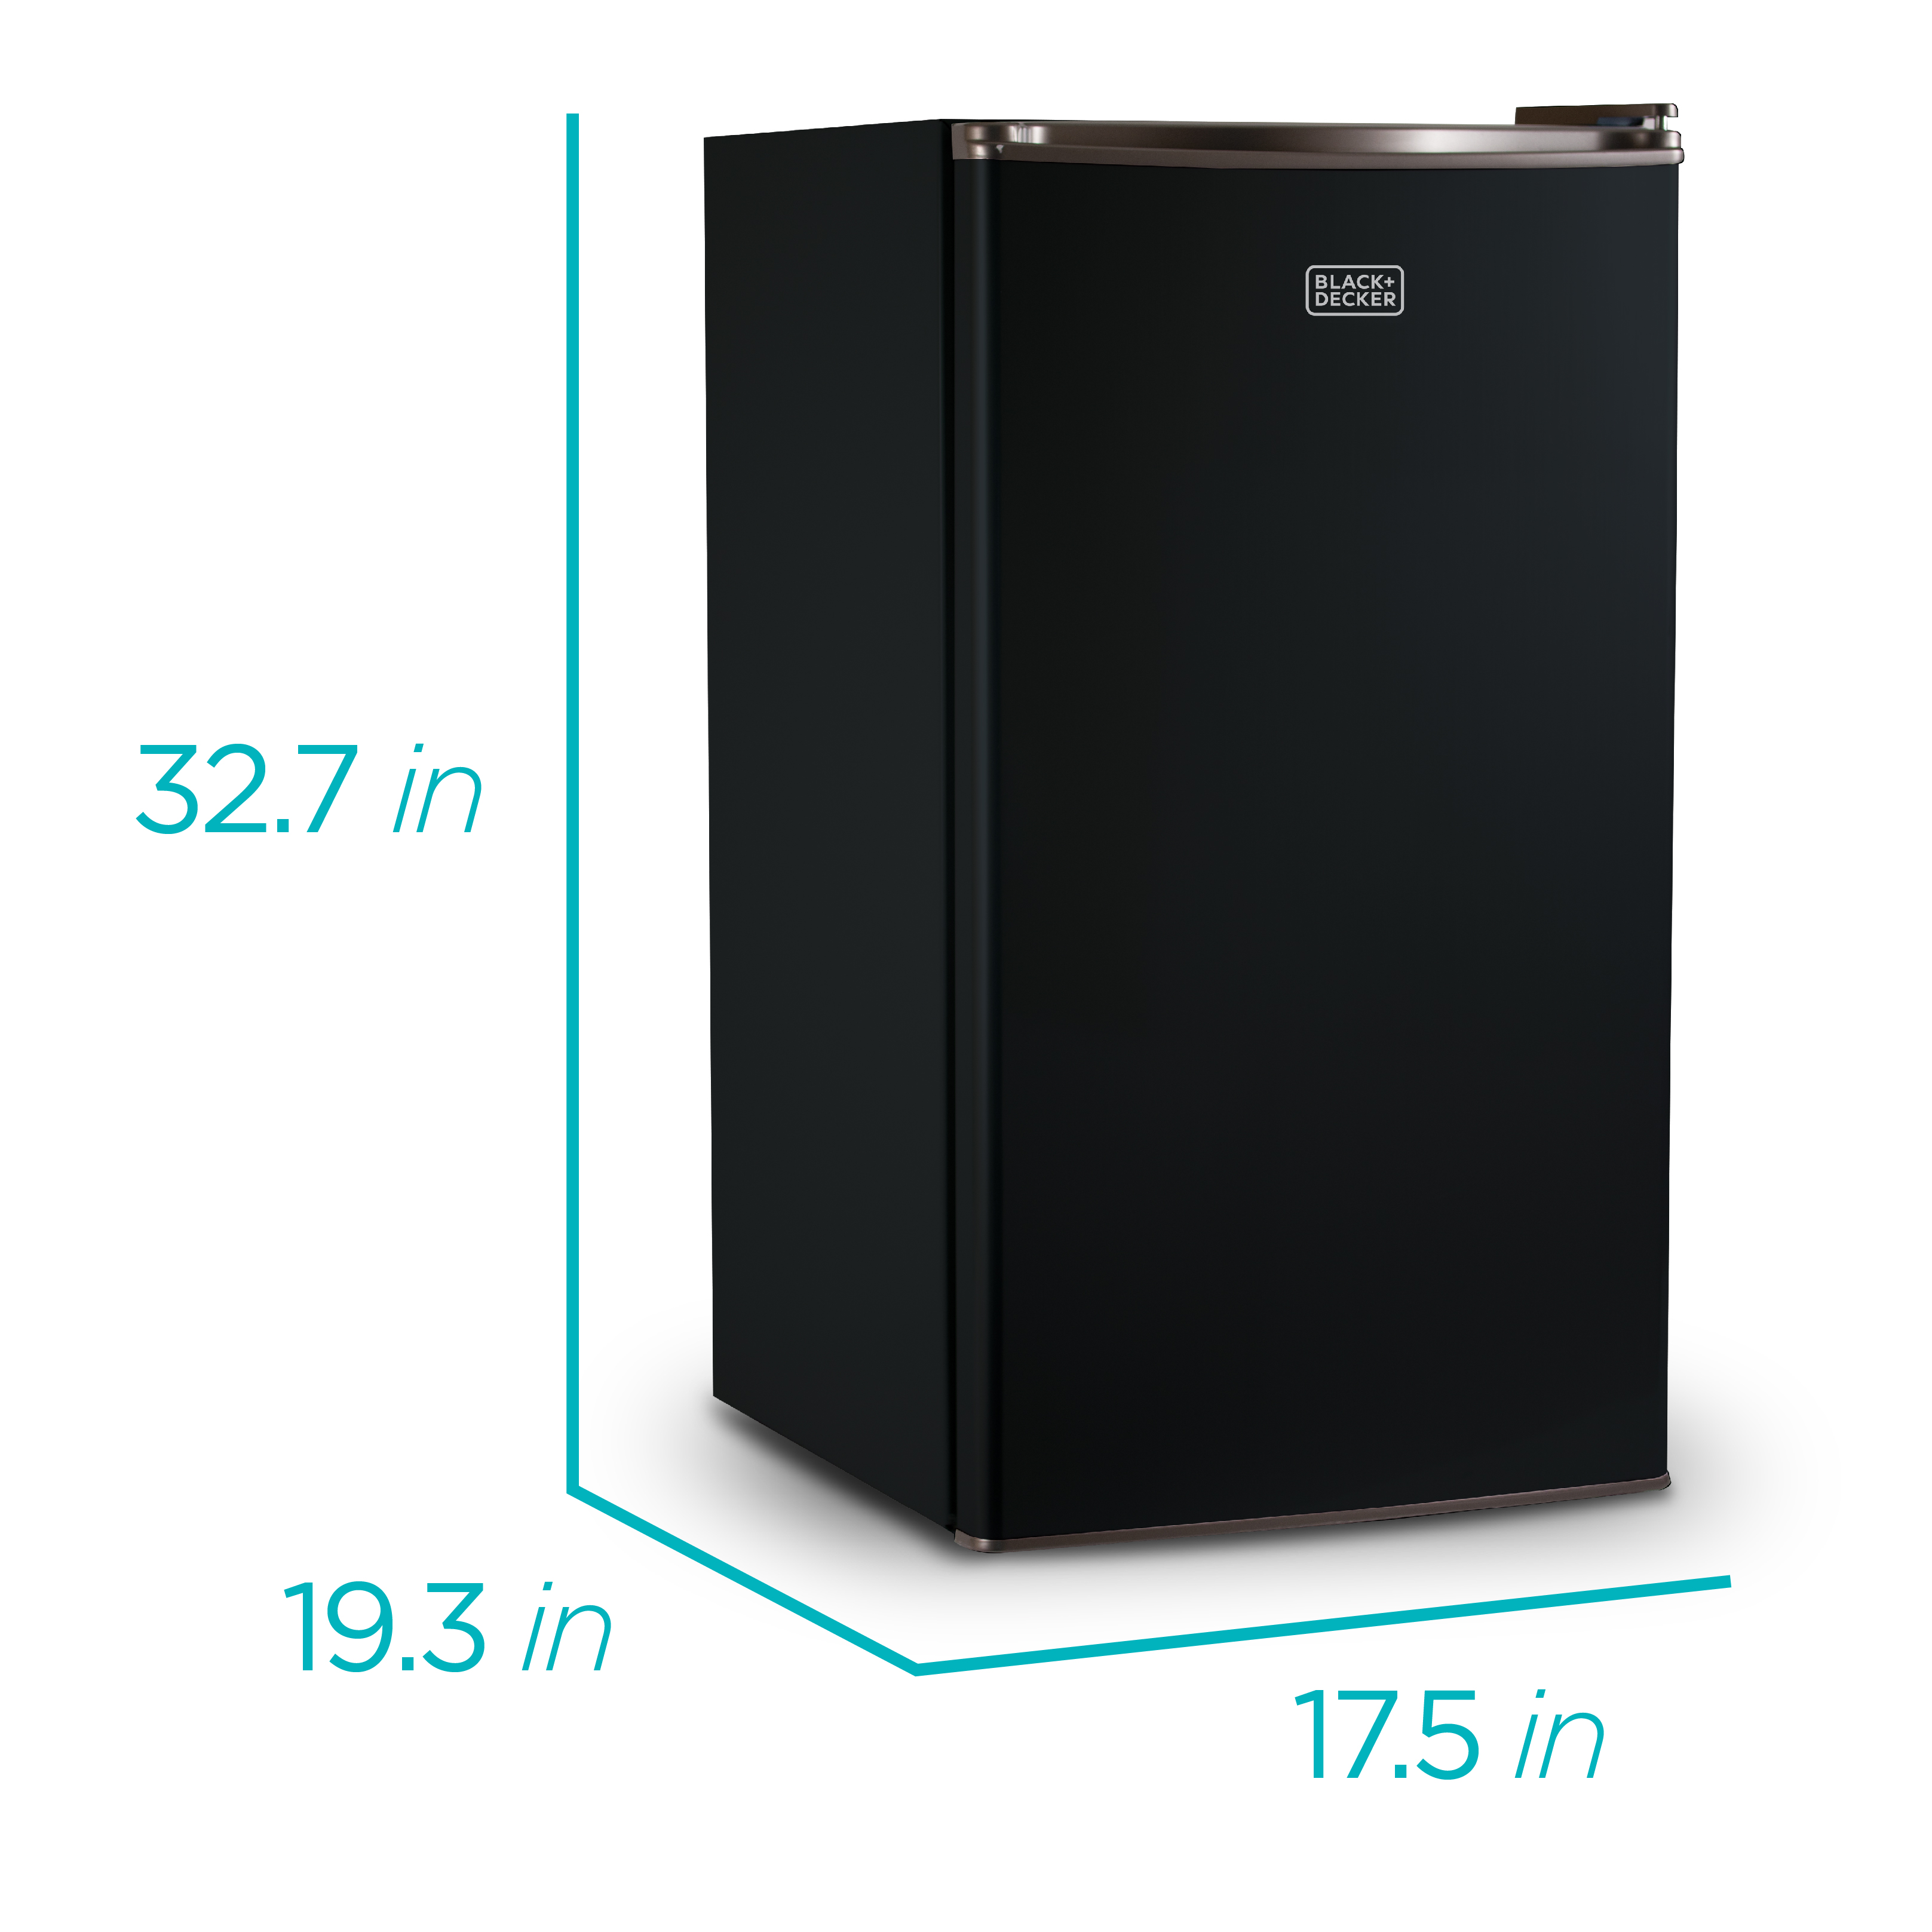 BLACK+DECKER BCRK32B Compact Refrigerator & Mini Fridge with Freezer, 3.2 cu. ft., Black - image 3 of 7